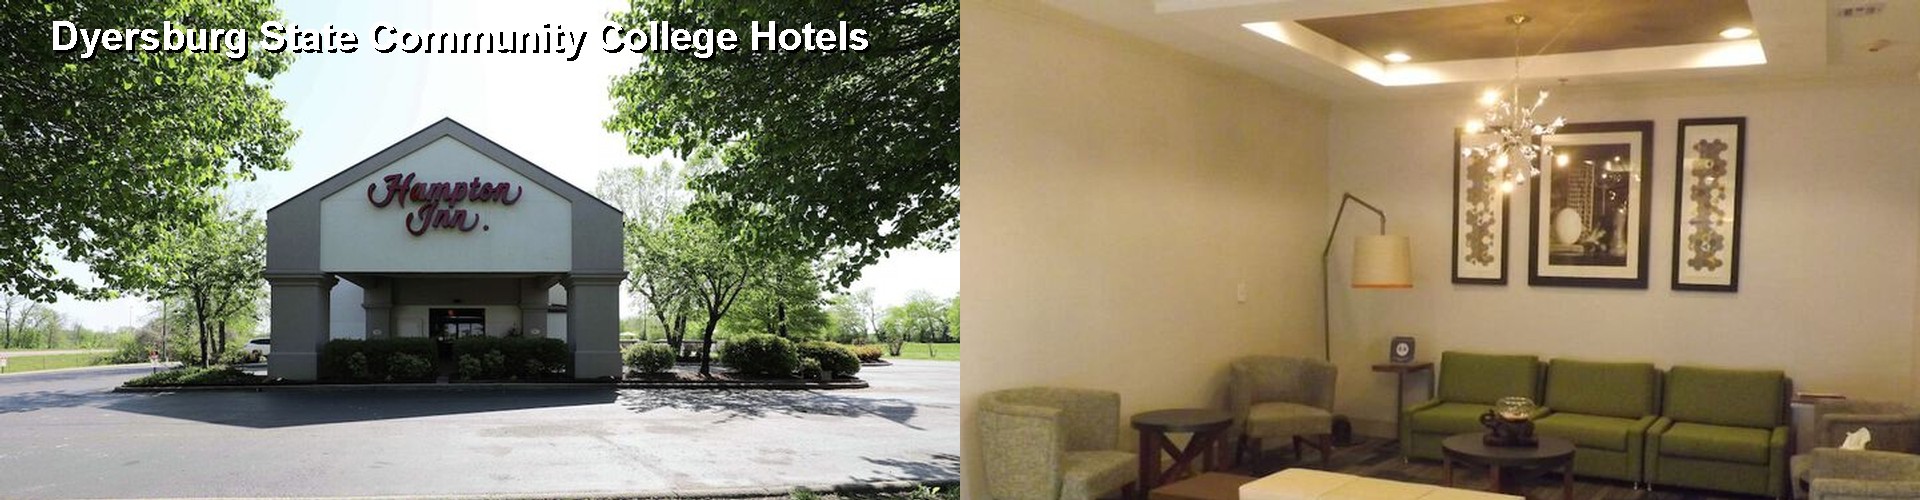 3 Best Hotels near Dyersburg State Community College